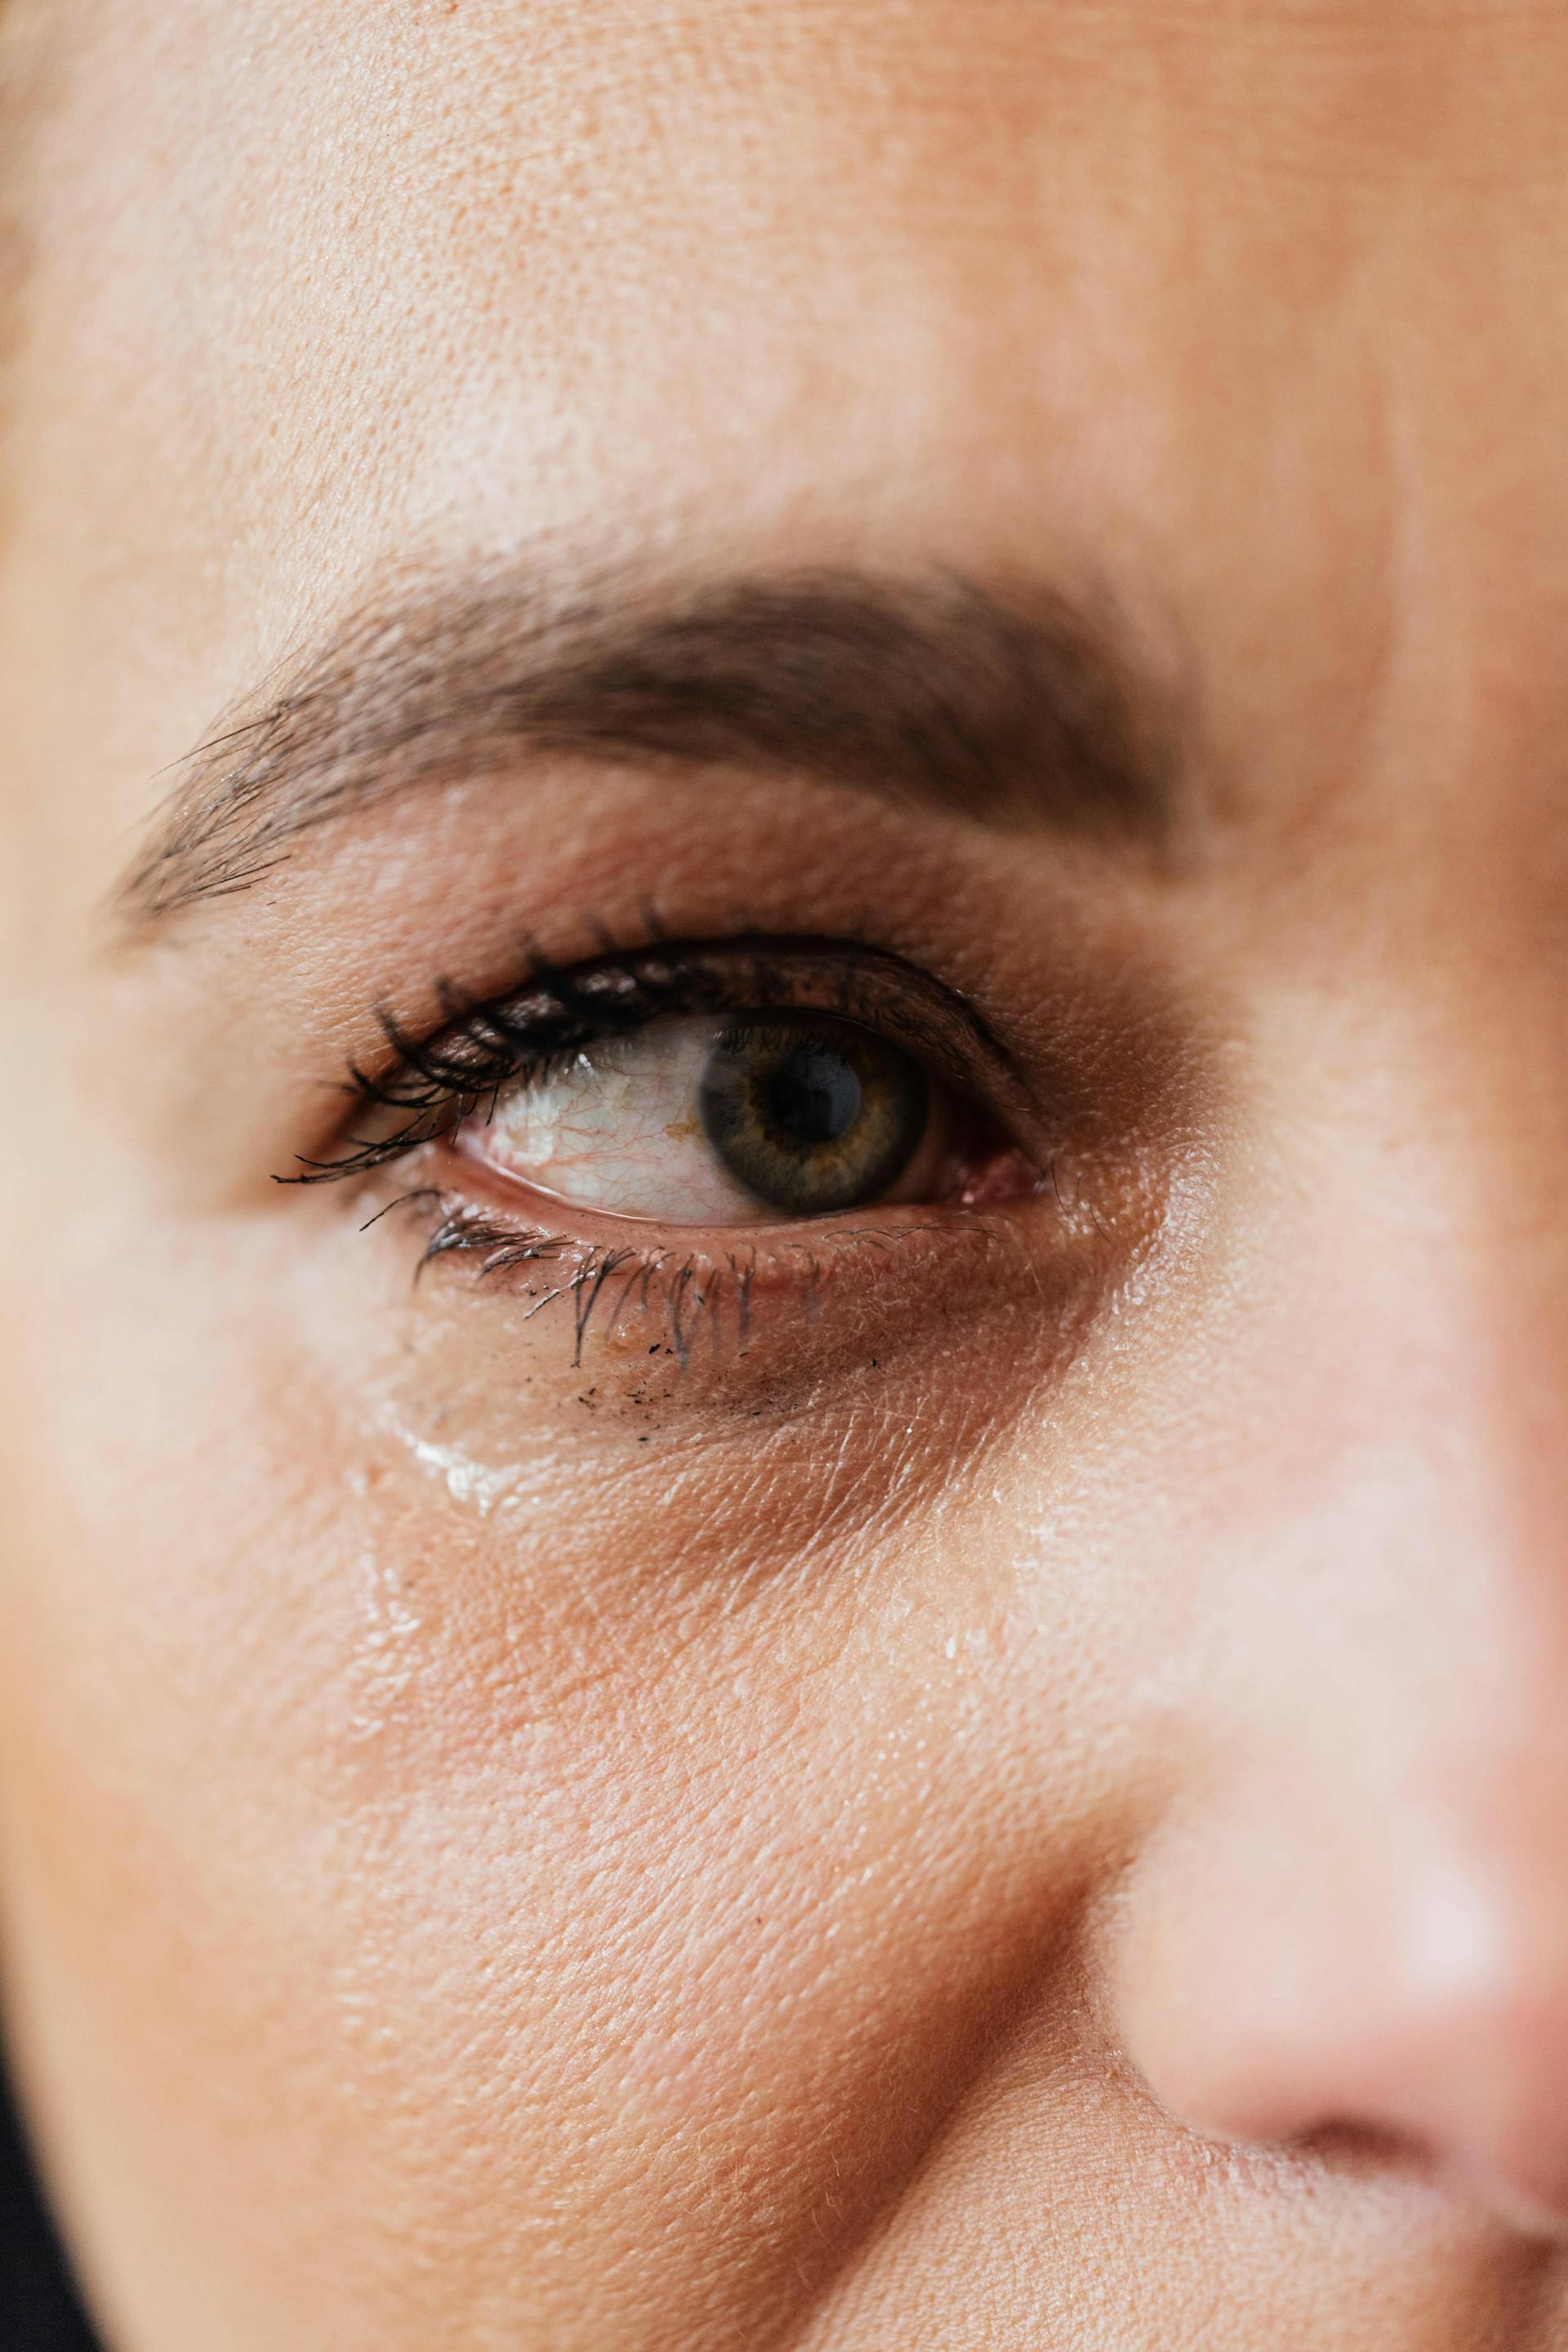 An upset, teary-eyed woman | Source: Pexels